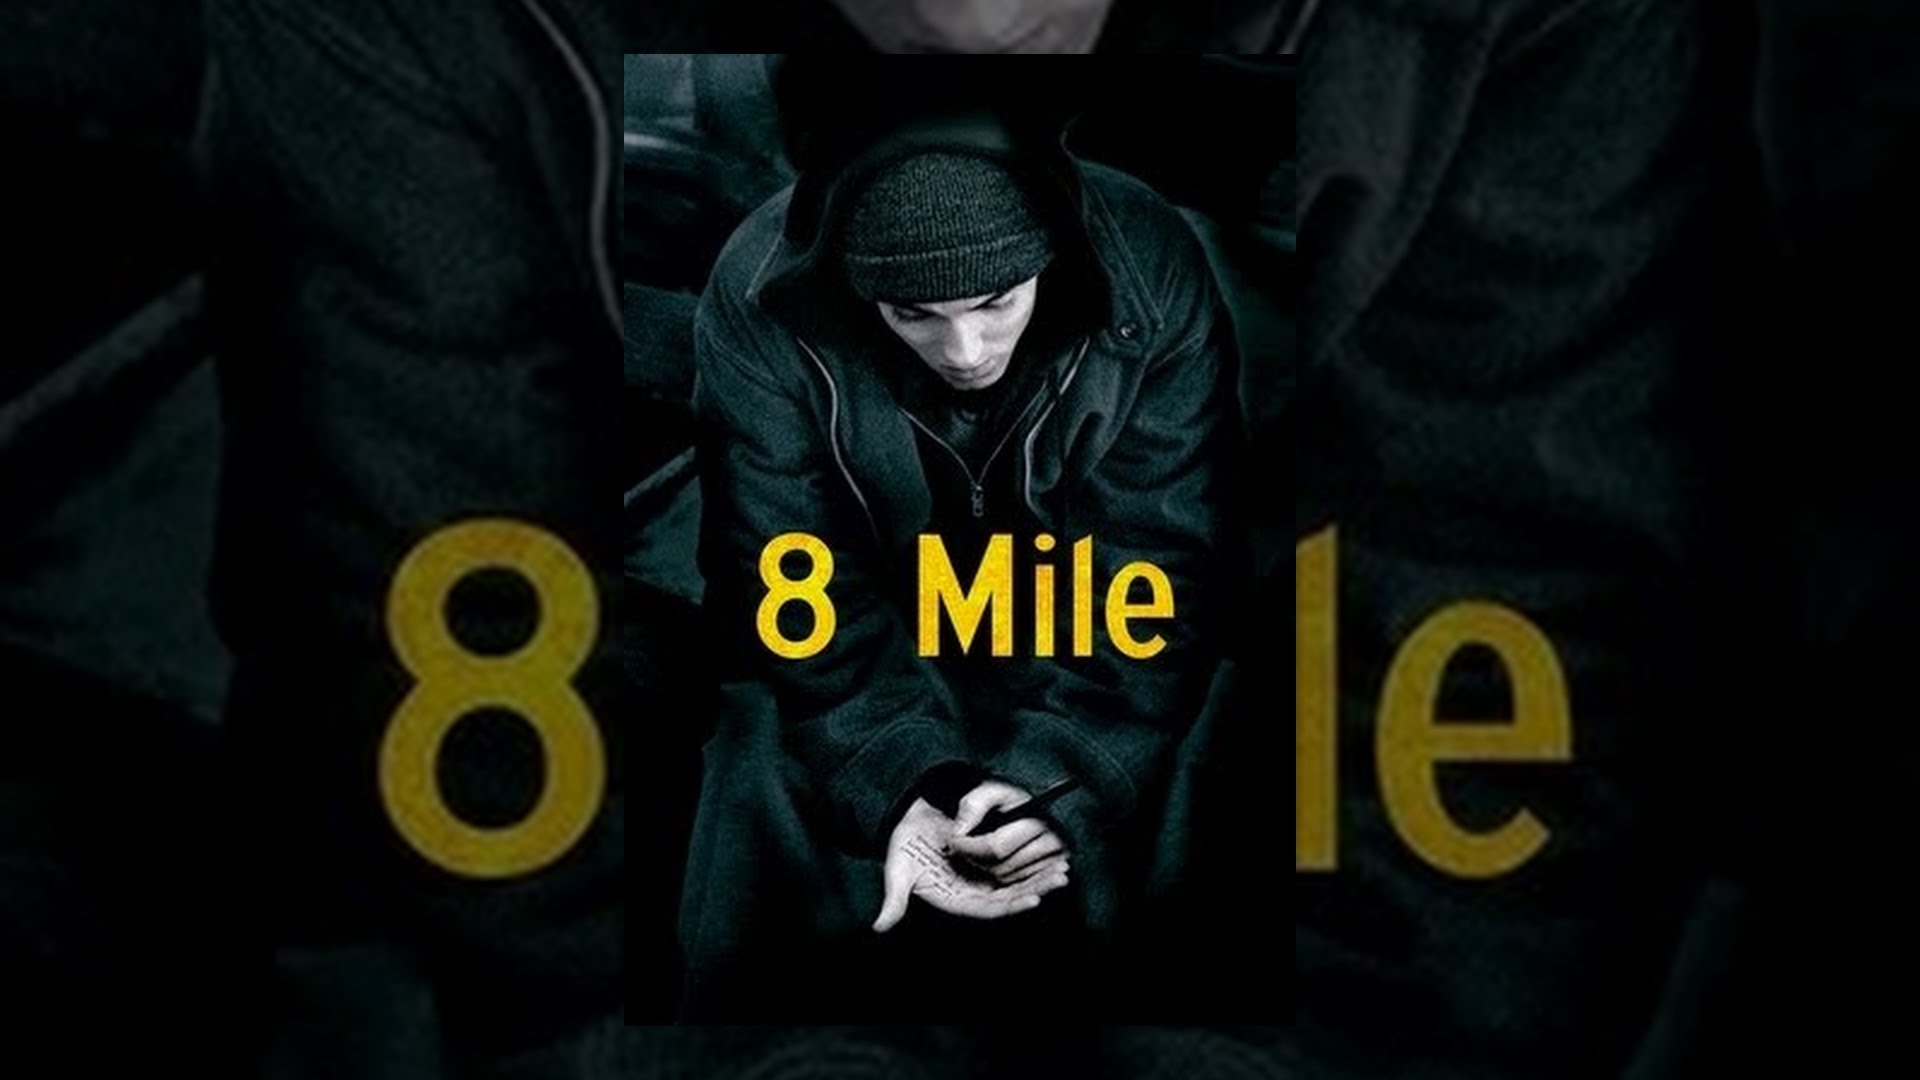 Download 8 Mile (2002) Full Movie | Stream 8 Mile (2002) Full HD | Watch 8 Mile (2002) | Free Download 8 Mile (2002) Full Movie